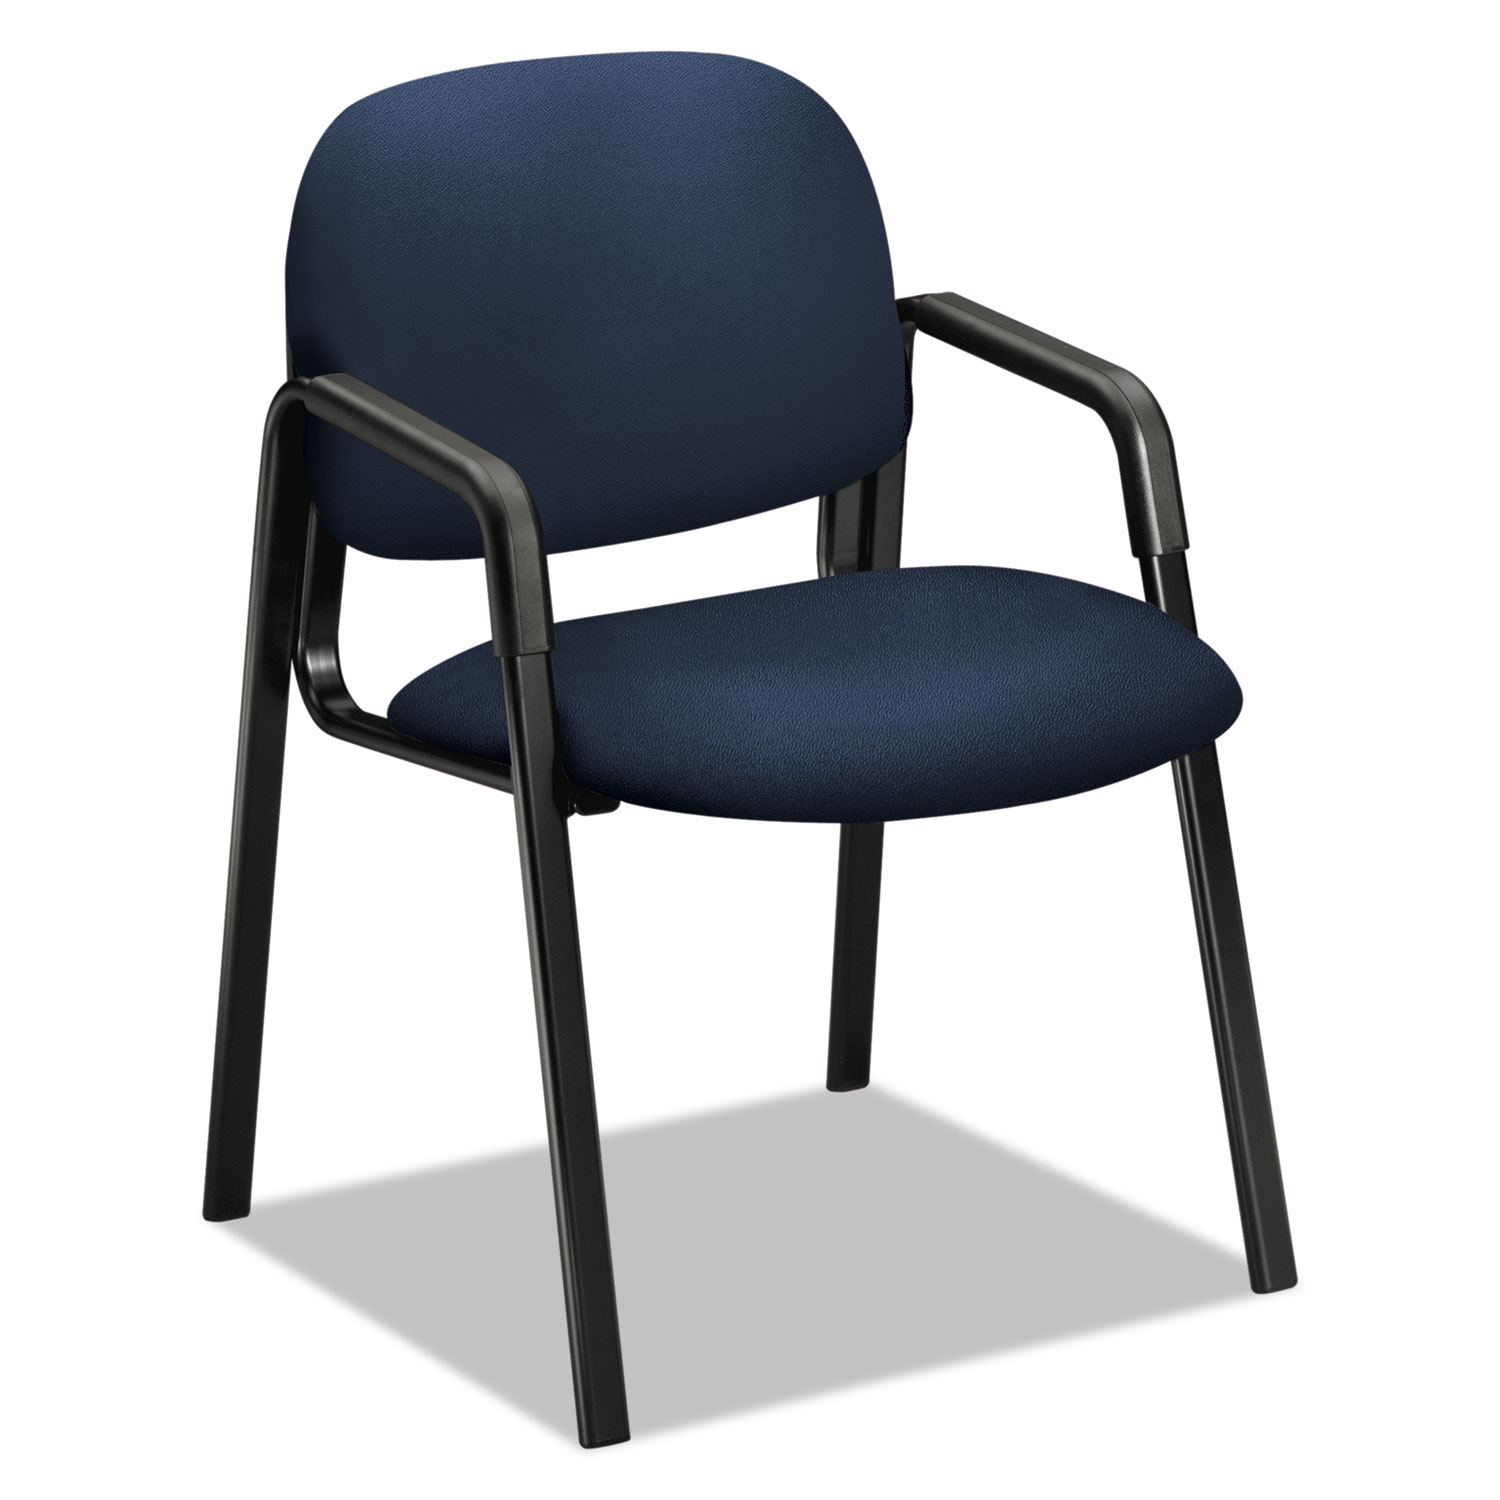  HON H4003.CU98.T Solutions Seating 4000 Series Leg Base Guest Chair, 23.5 x 24.5 x 32, Navy Seat, Navy Back, Black Base (HON4003CU98T) 